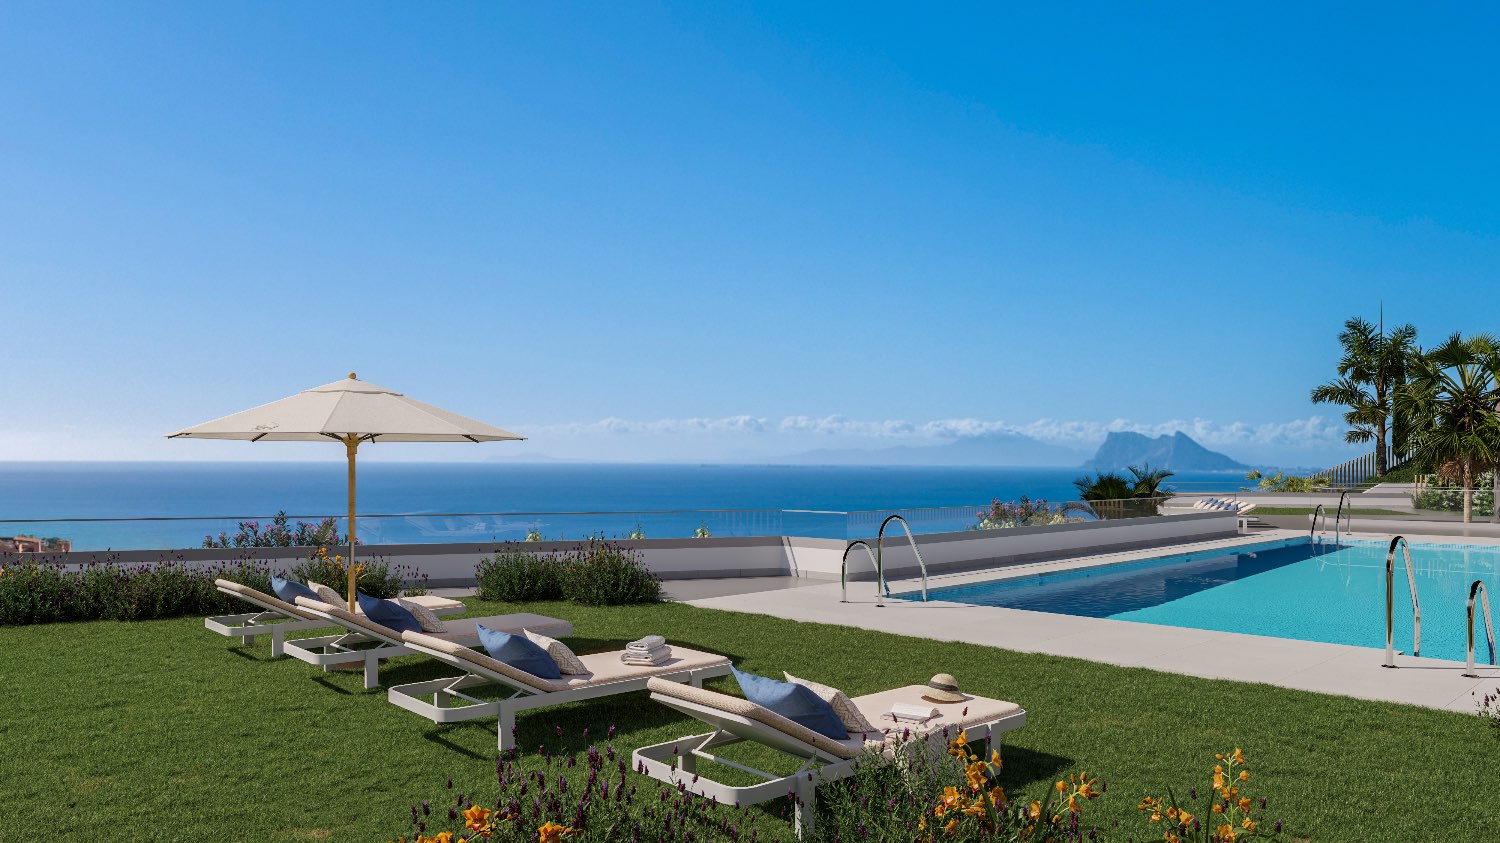 Appartement Duplex exclusif avec jardin et vue sur la mer - Costa del Sol